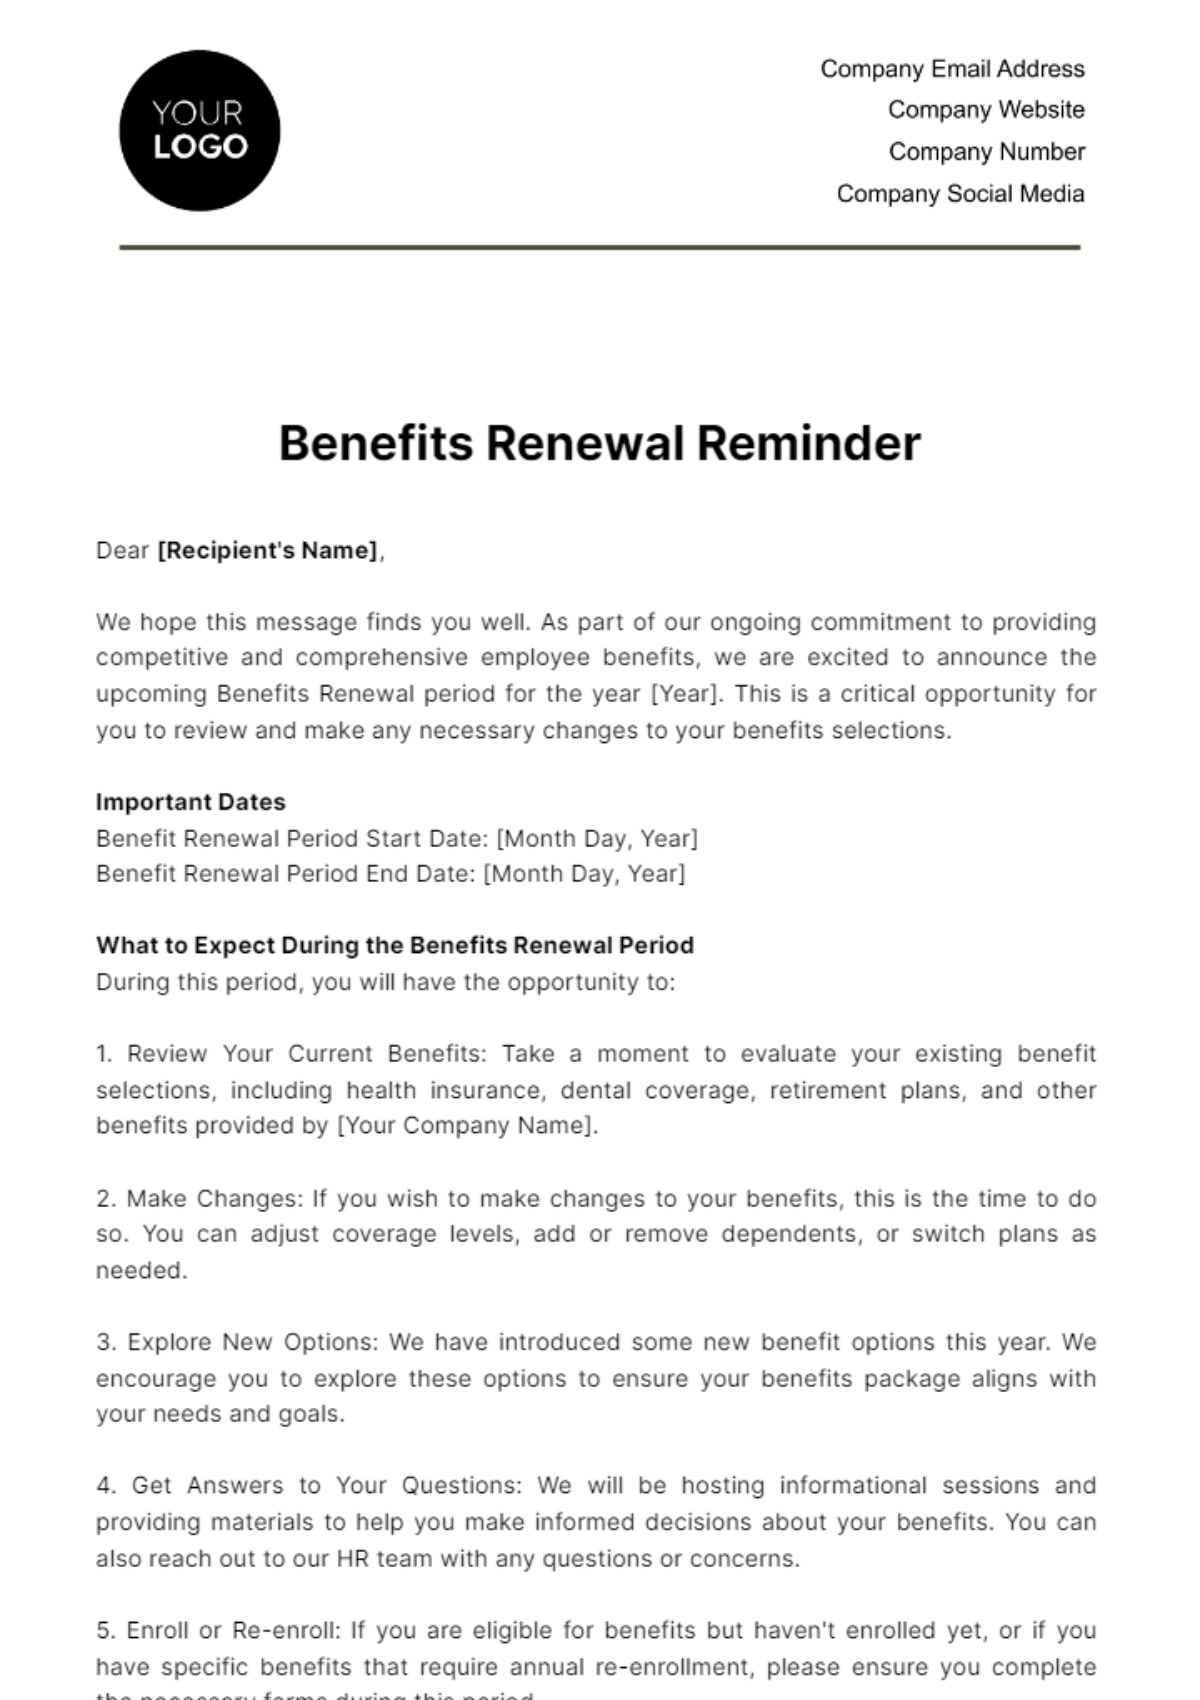 Benefits Renewal Reminder HR Template